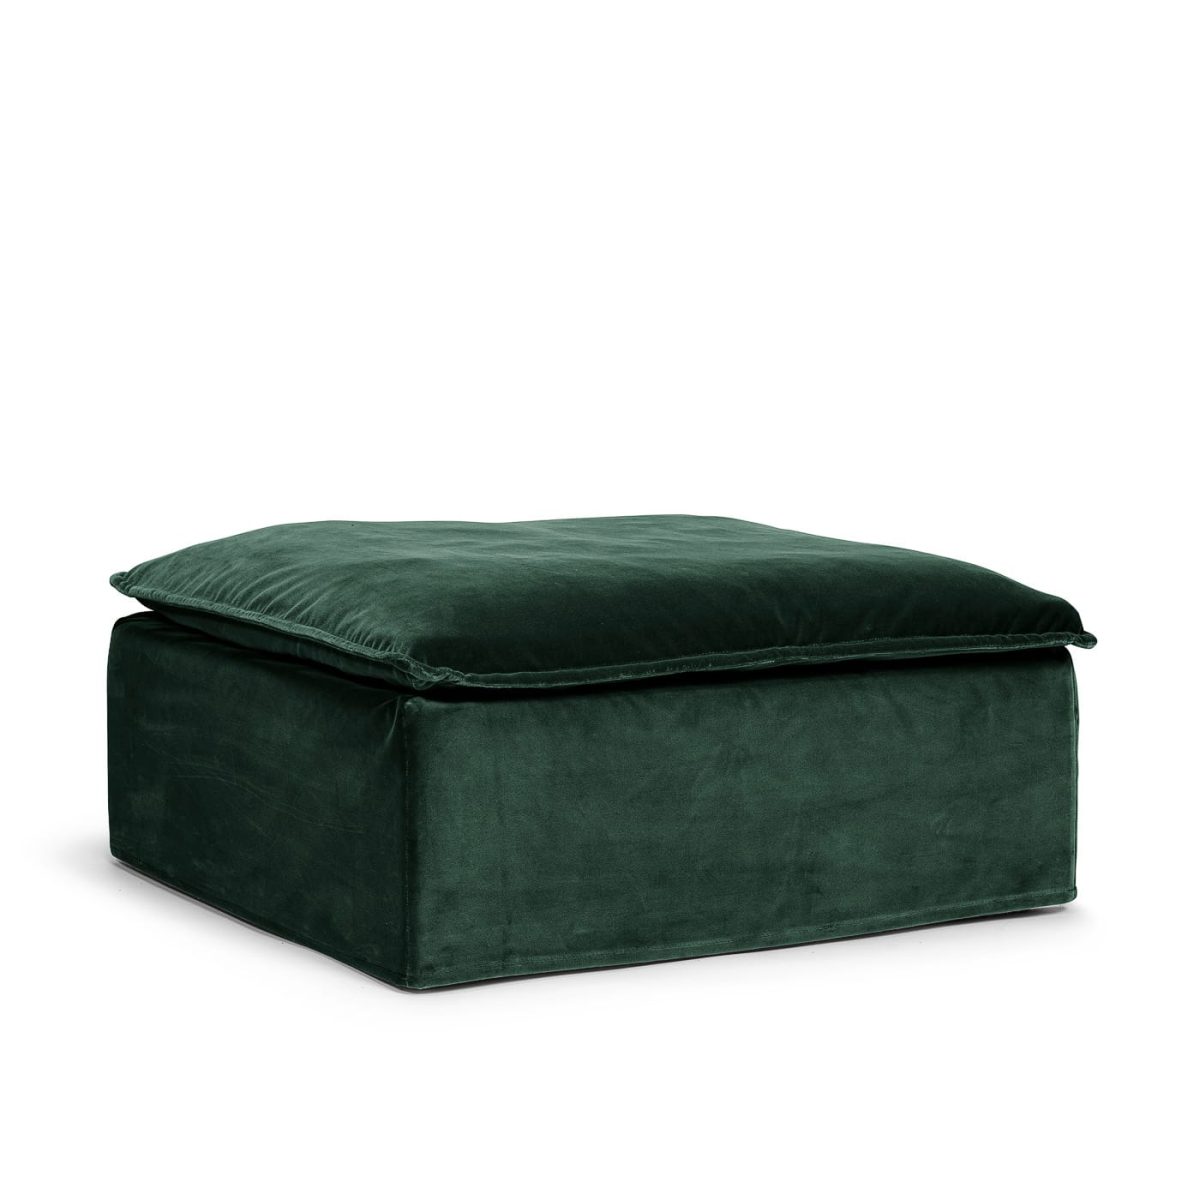 Luca Grande 2-seater sofa Emerald Green